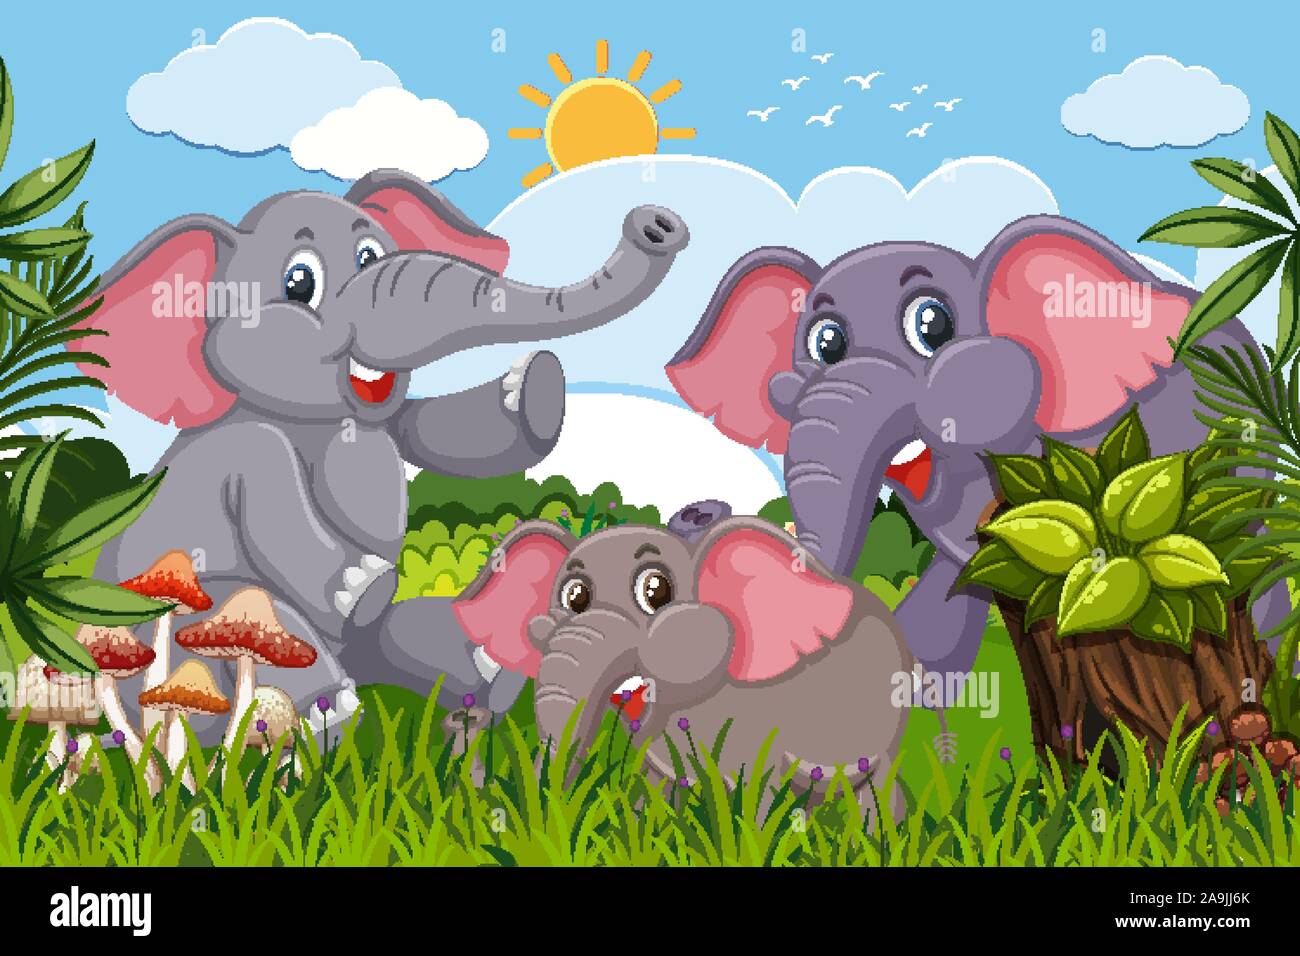 Elefanten in der Natur Szene Abbildung Stock Vektor